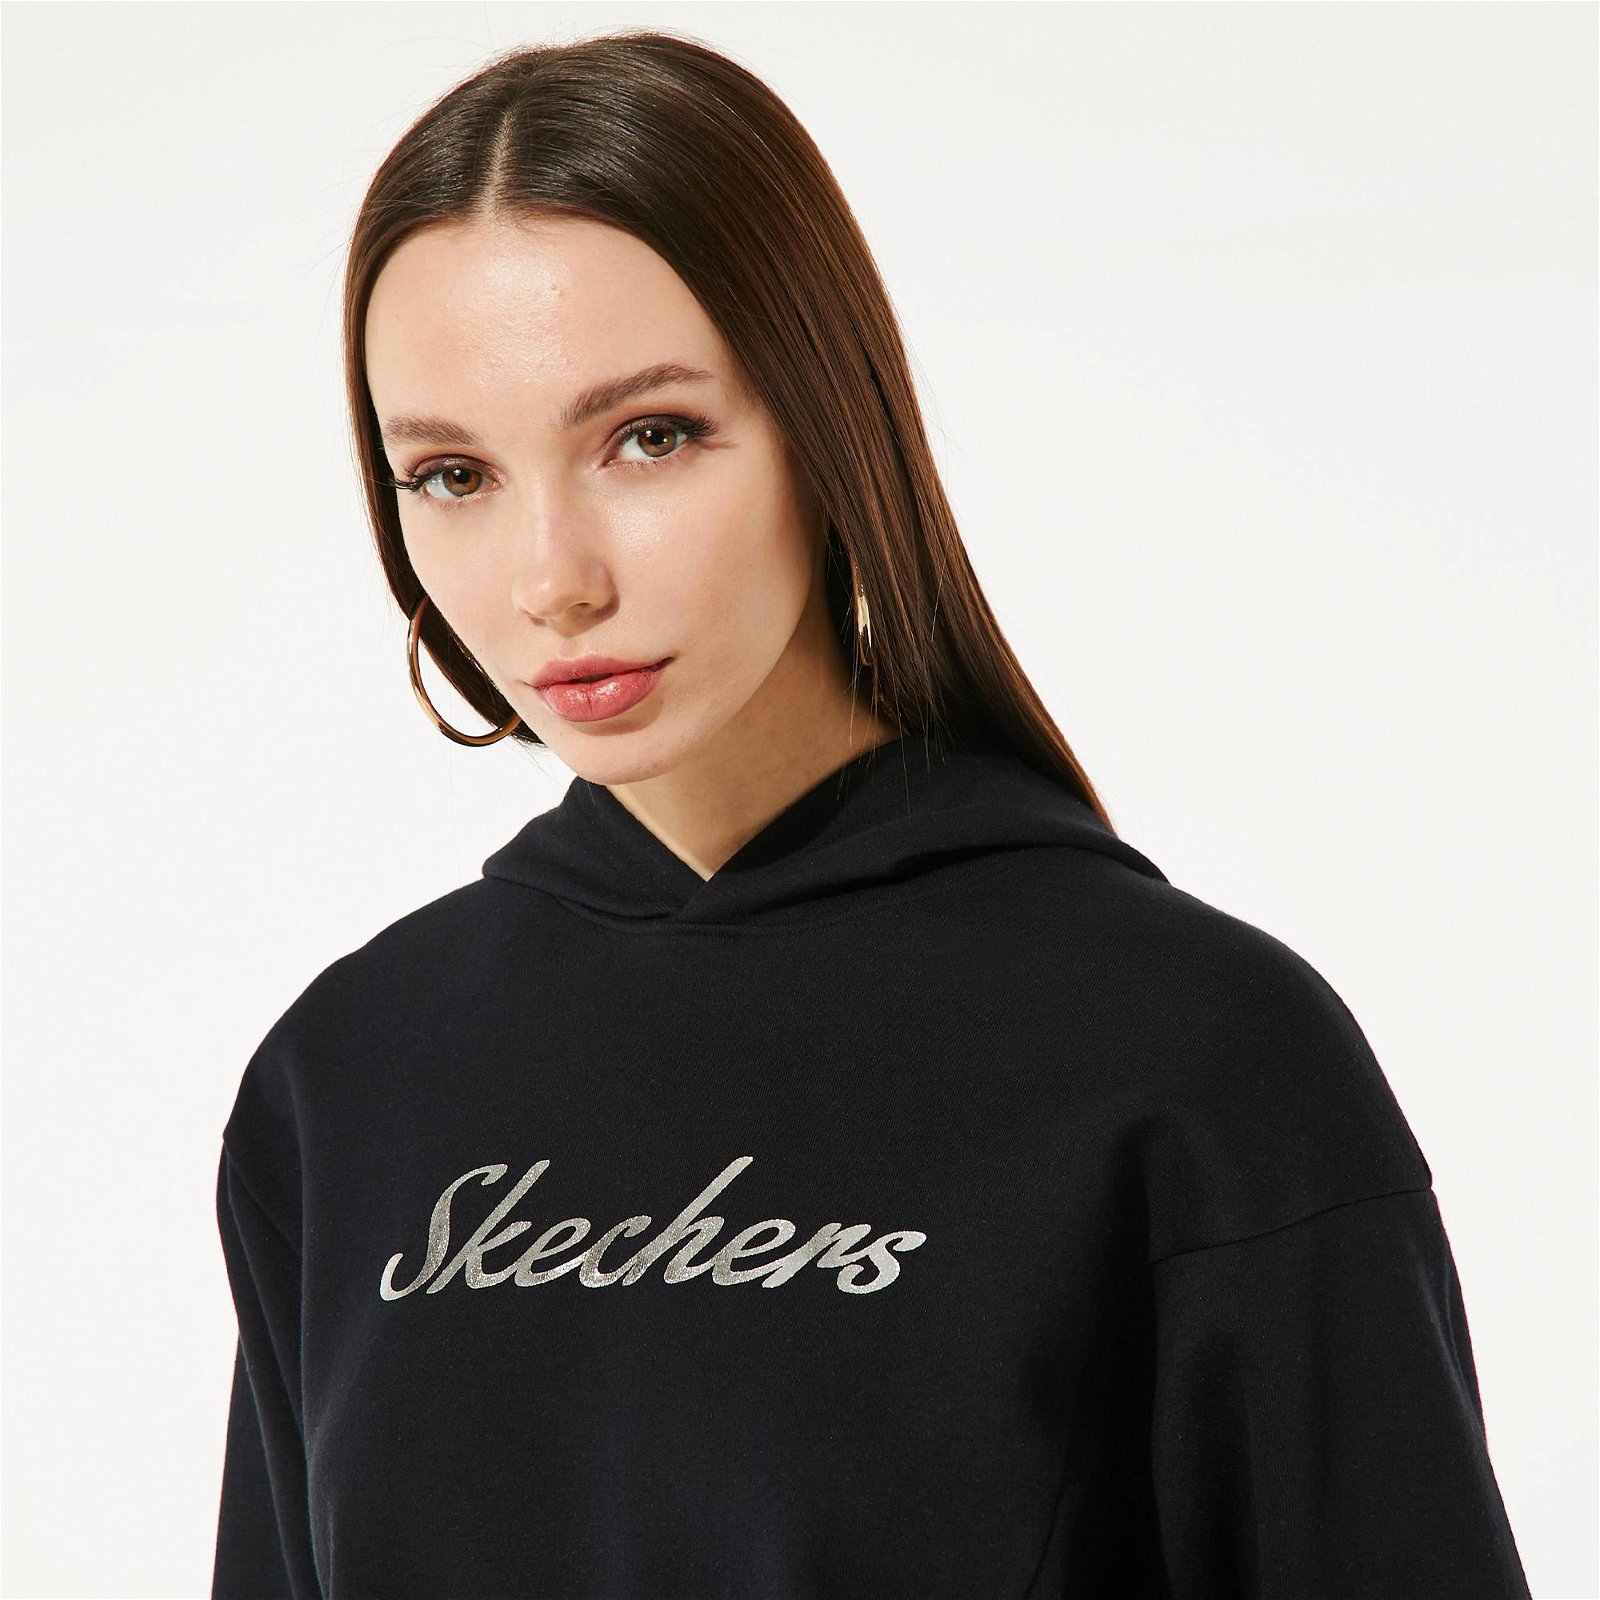 Skechers 2Xi-Lock Kadın Siyah Kapüşonlu Sweatshirt